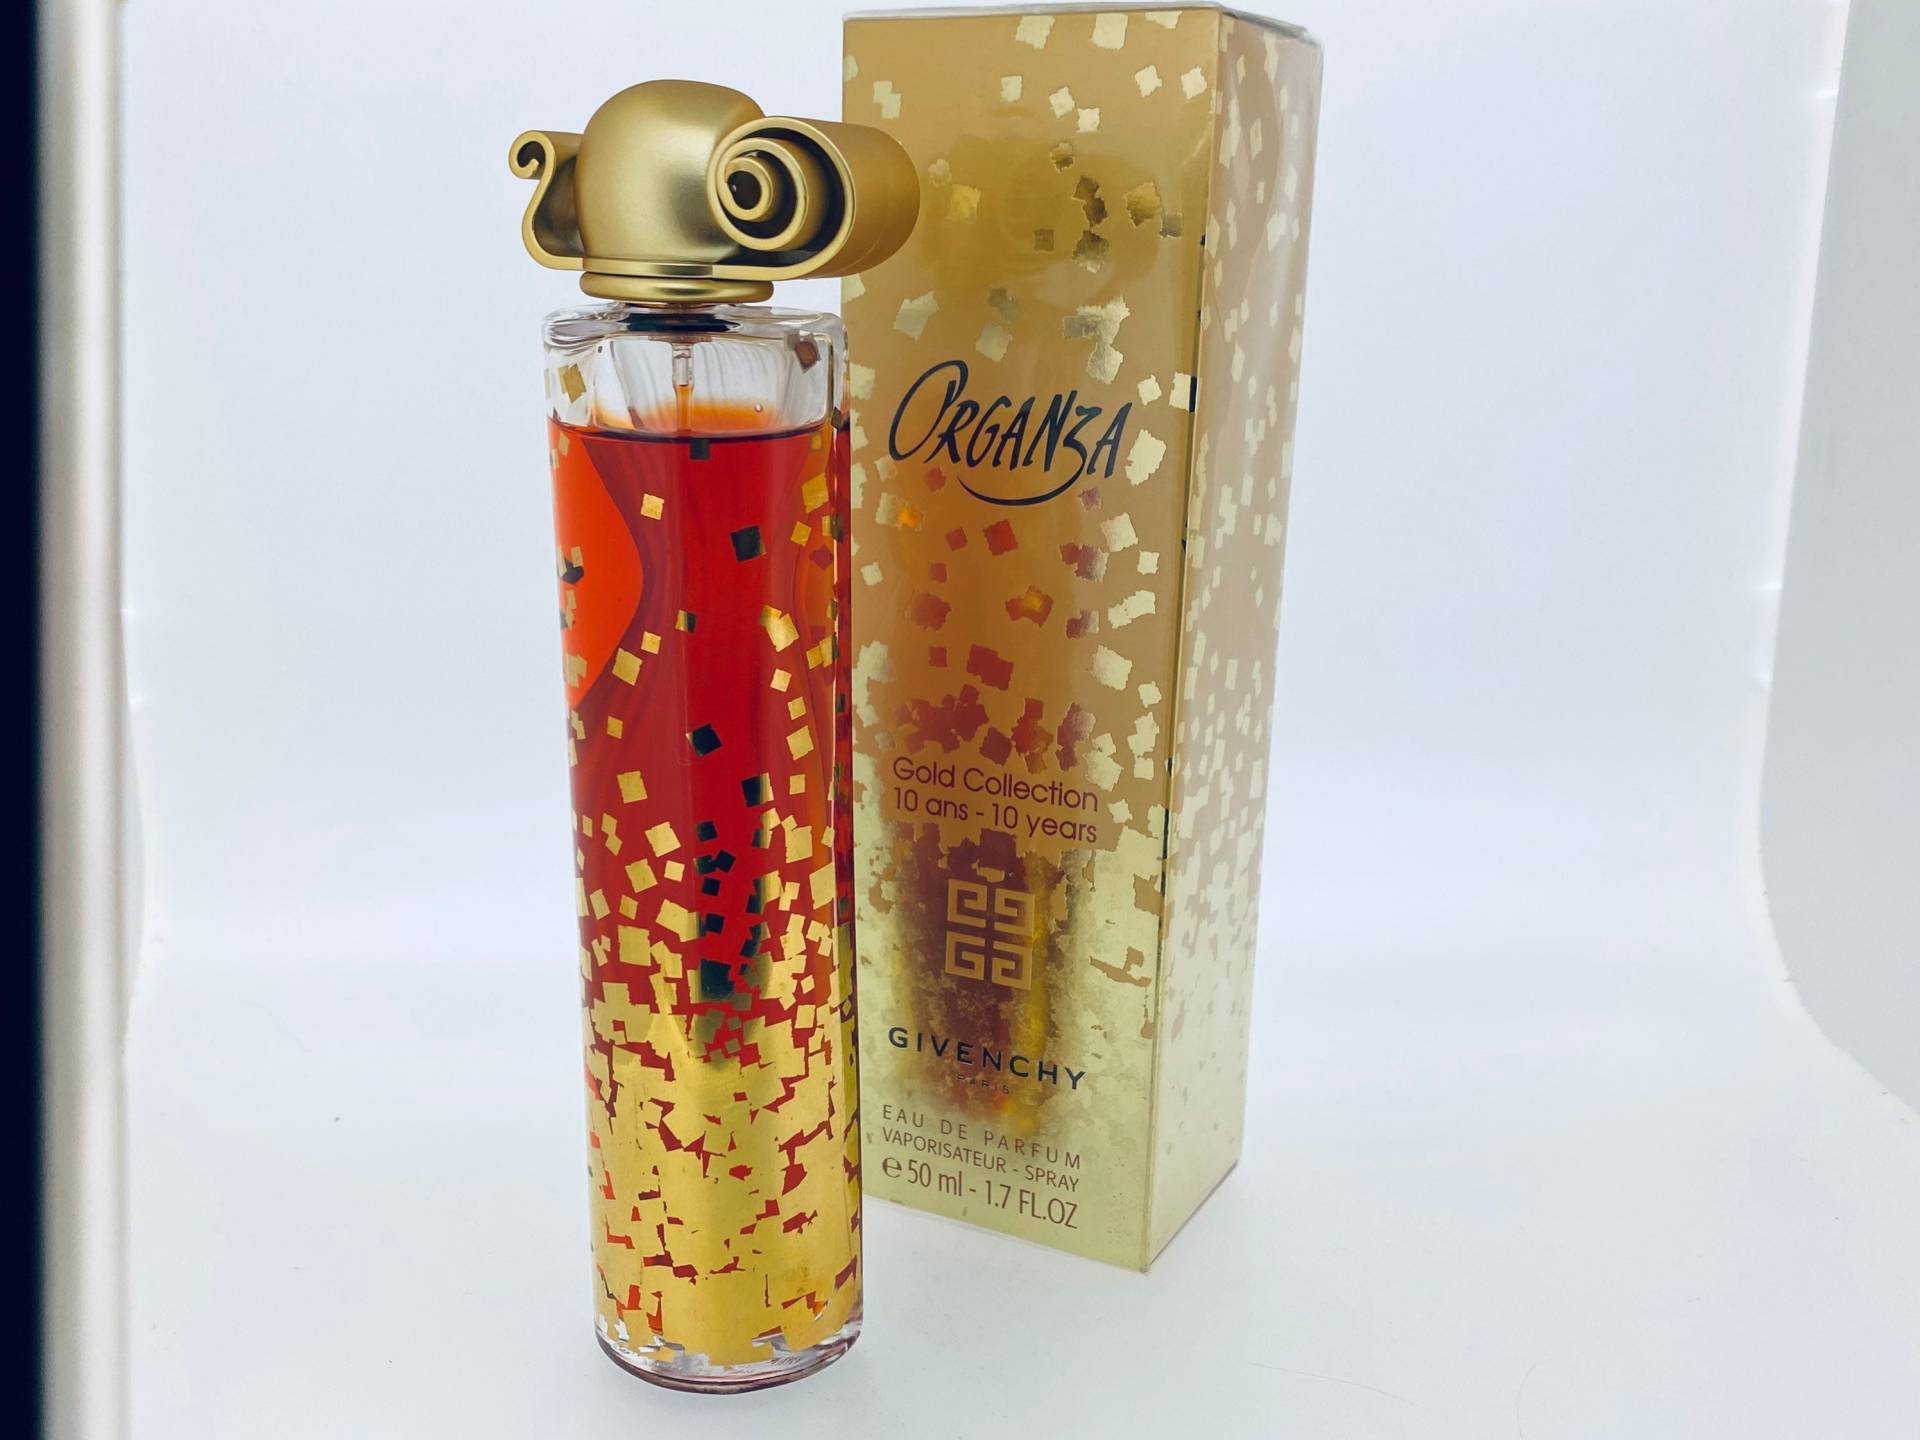 Organza Gold Kollektion 10 Ans - Jahre Givenchy Eau De Parfum 50 Ml von VintagePerfumeShop